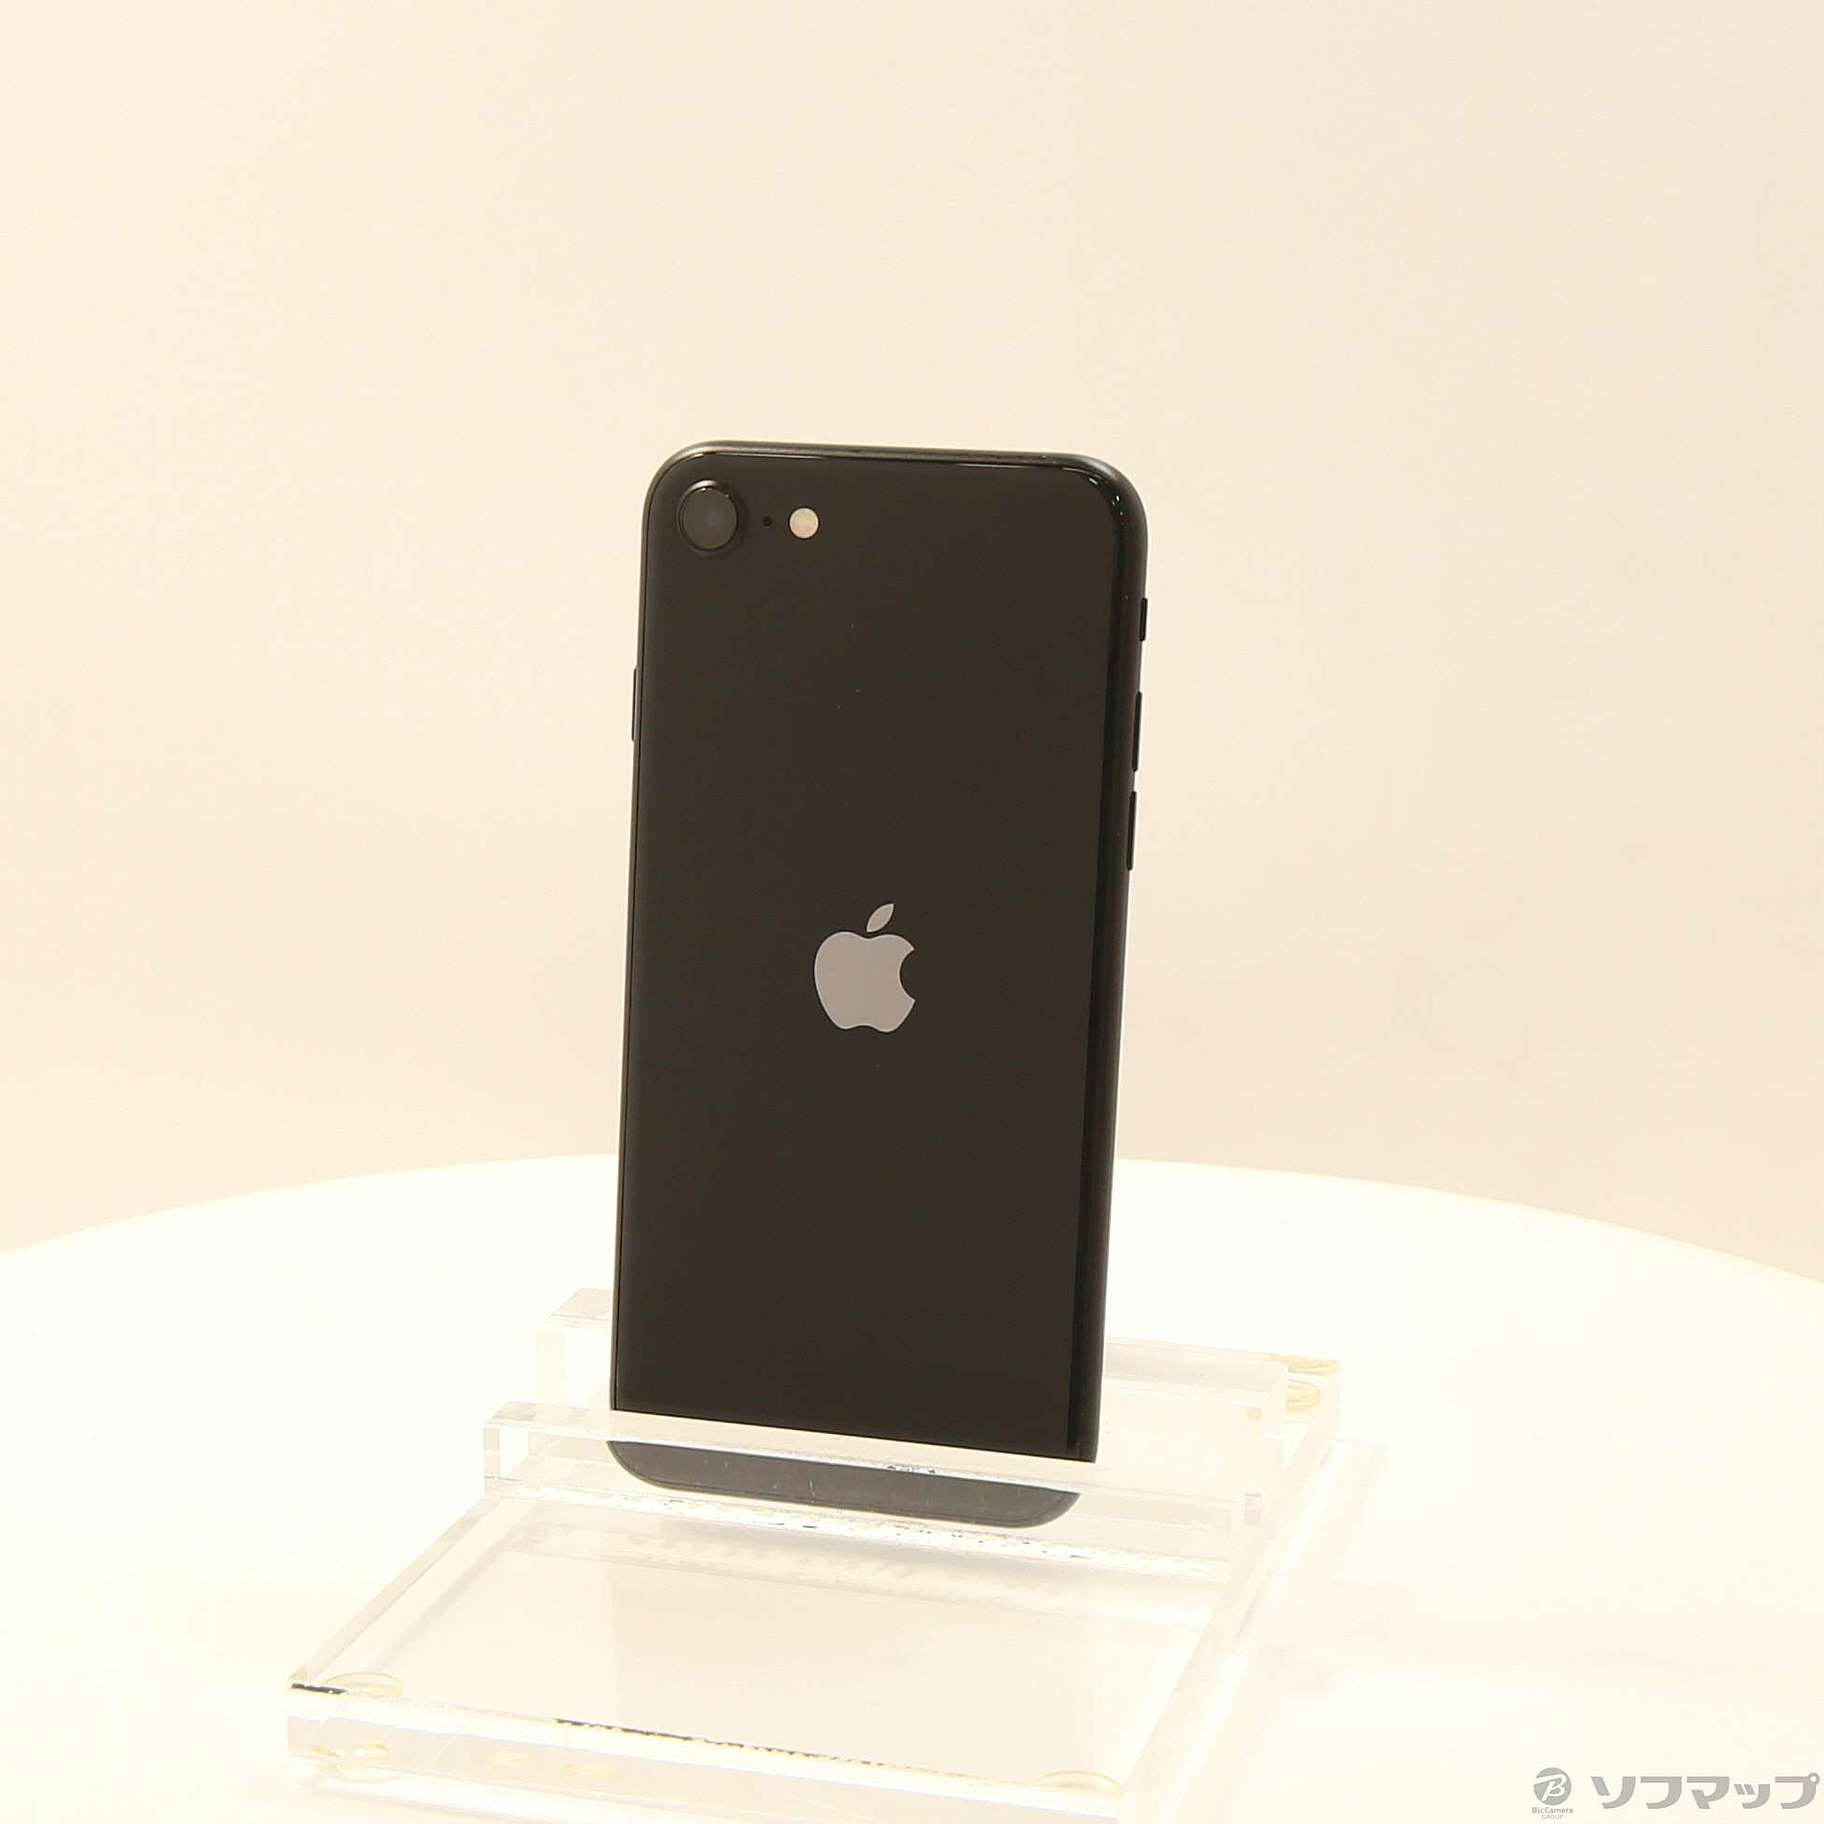 iPhone SE 第2世代 128GB 黒 SIMフリー